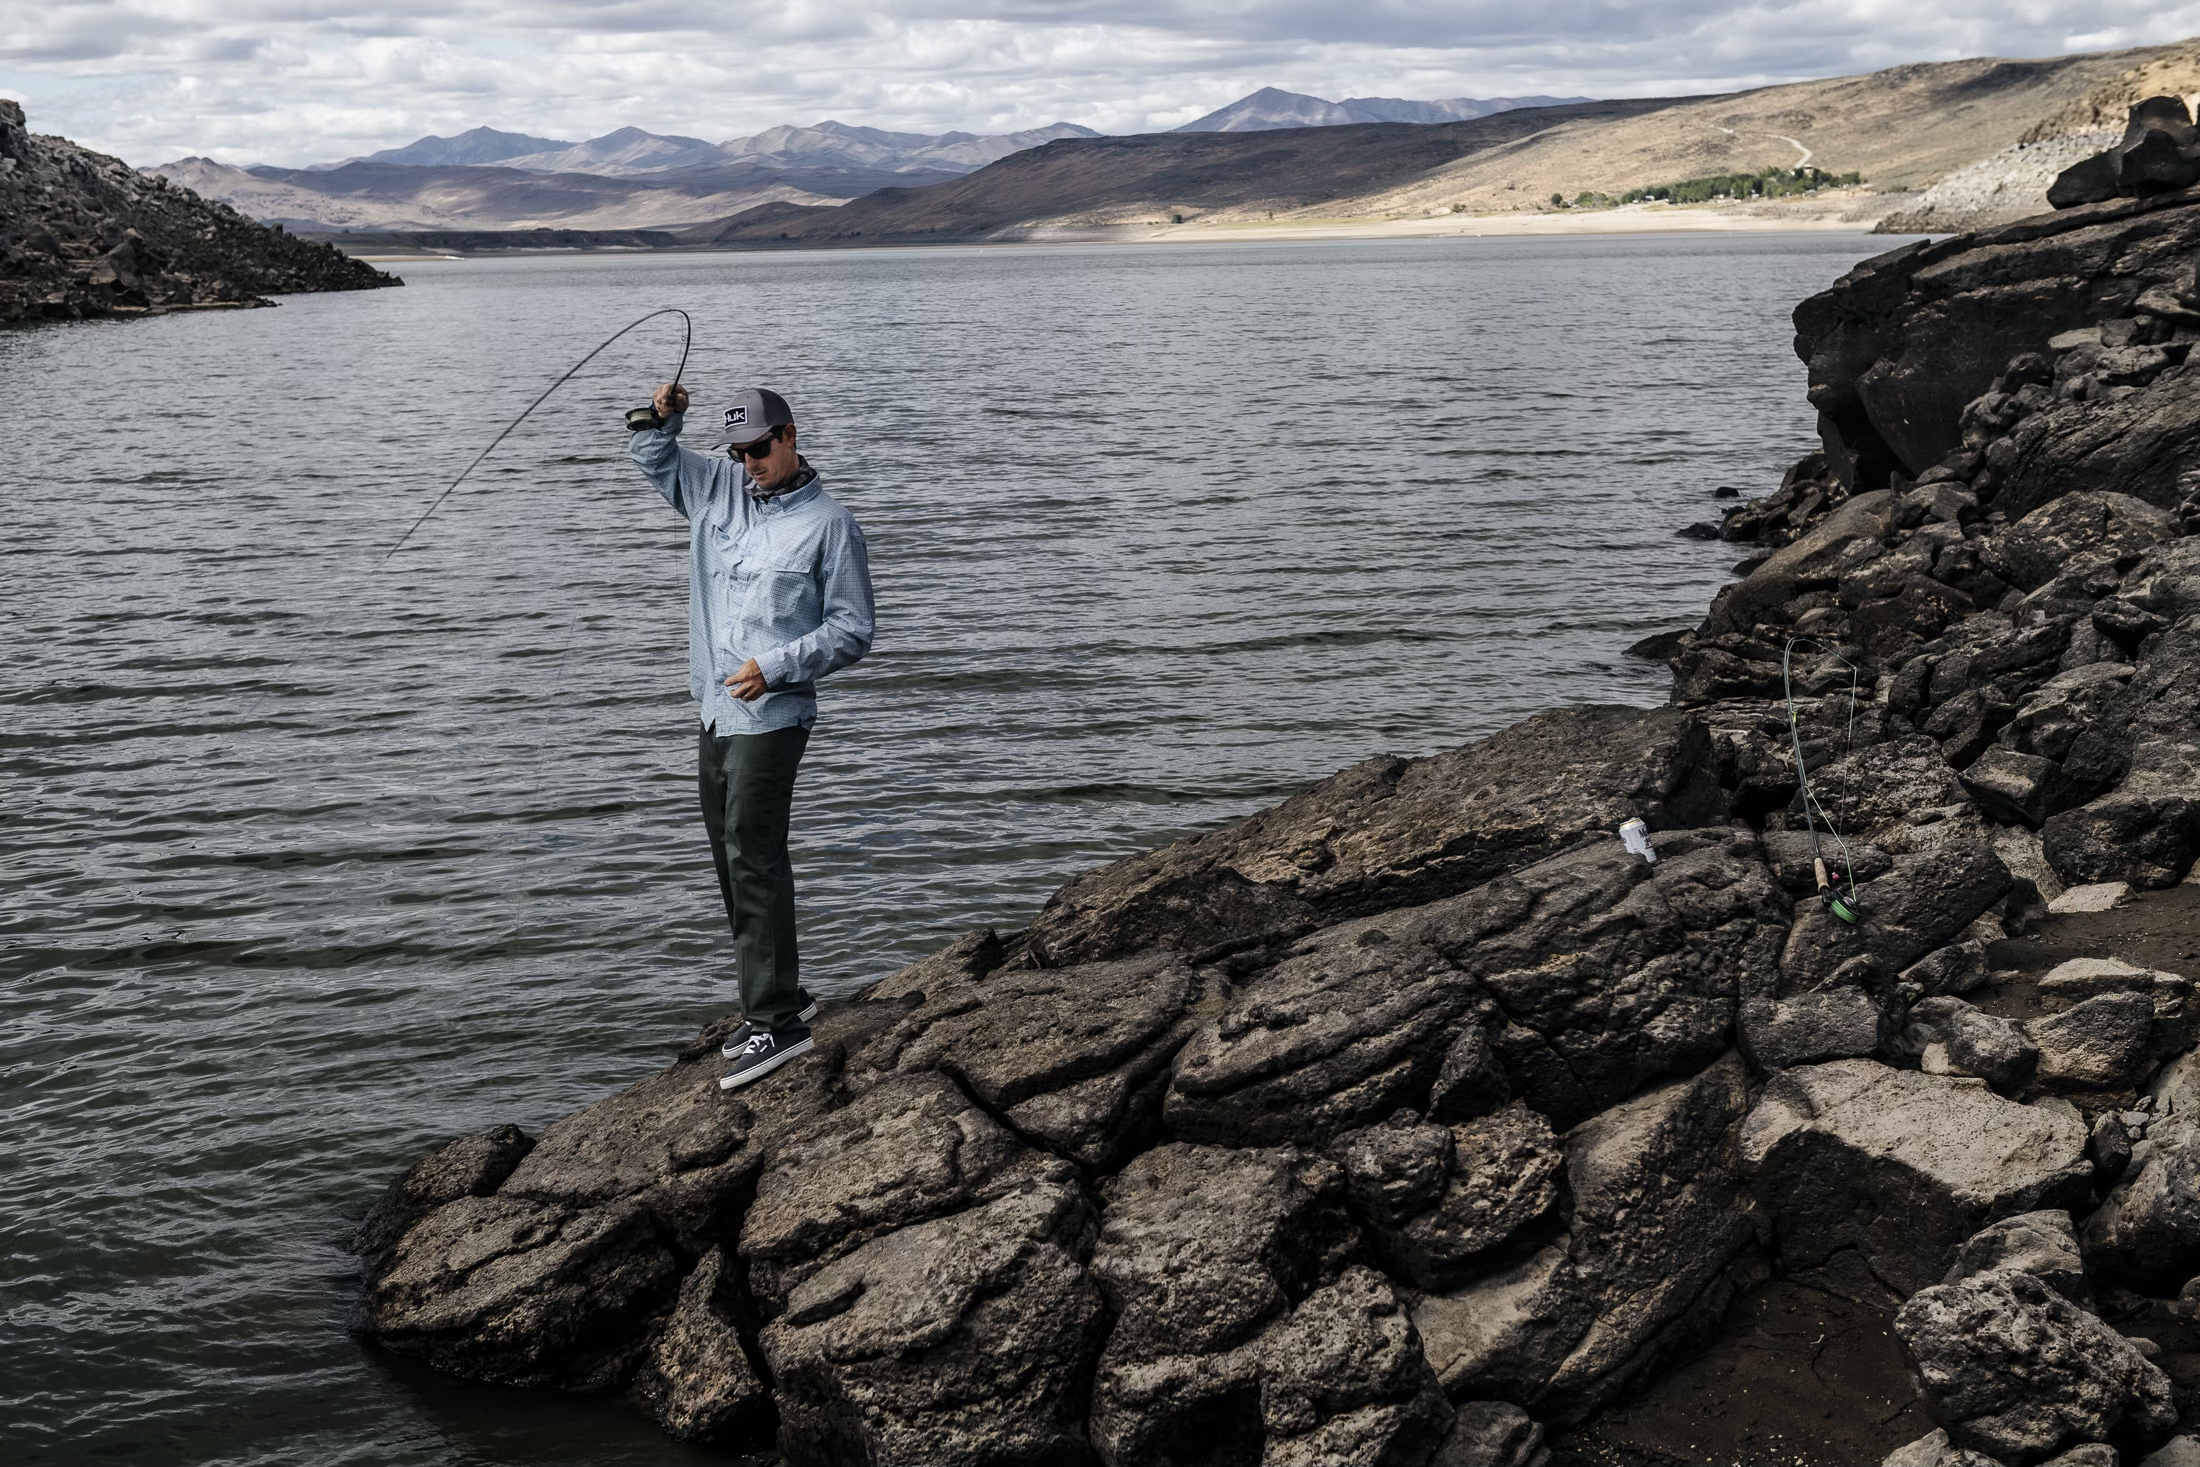 Angler fishing from the shore | Fly Fishing Idaho | Sun Valley Idaho Fly Fishing | Silver Creek Outfitters | Fly Fishing Guide Idaho